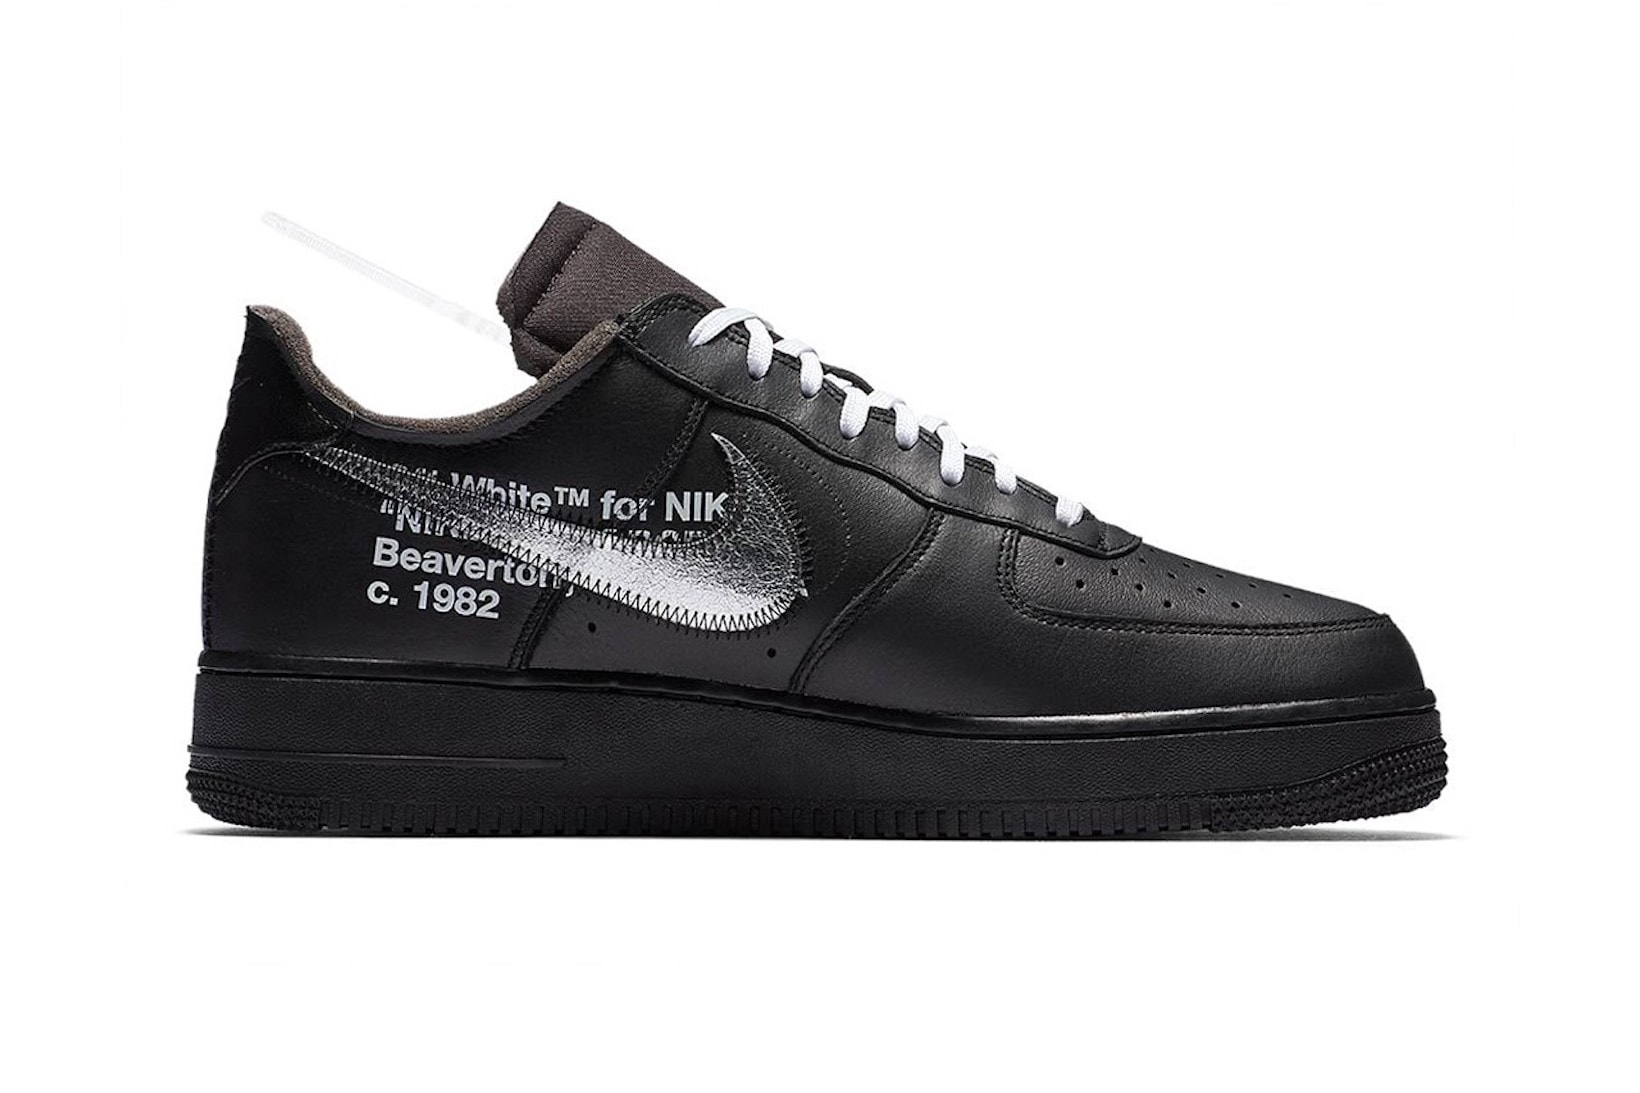 nike off white virgil abloh moma collaboration air force 1 black colorway sneakers sneakerhead footwear shoes